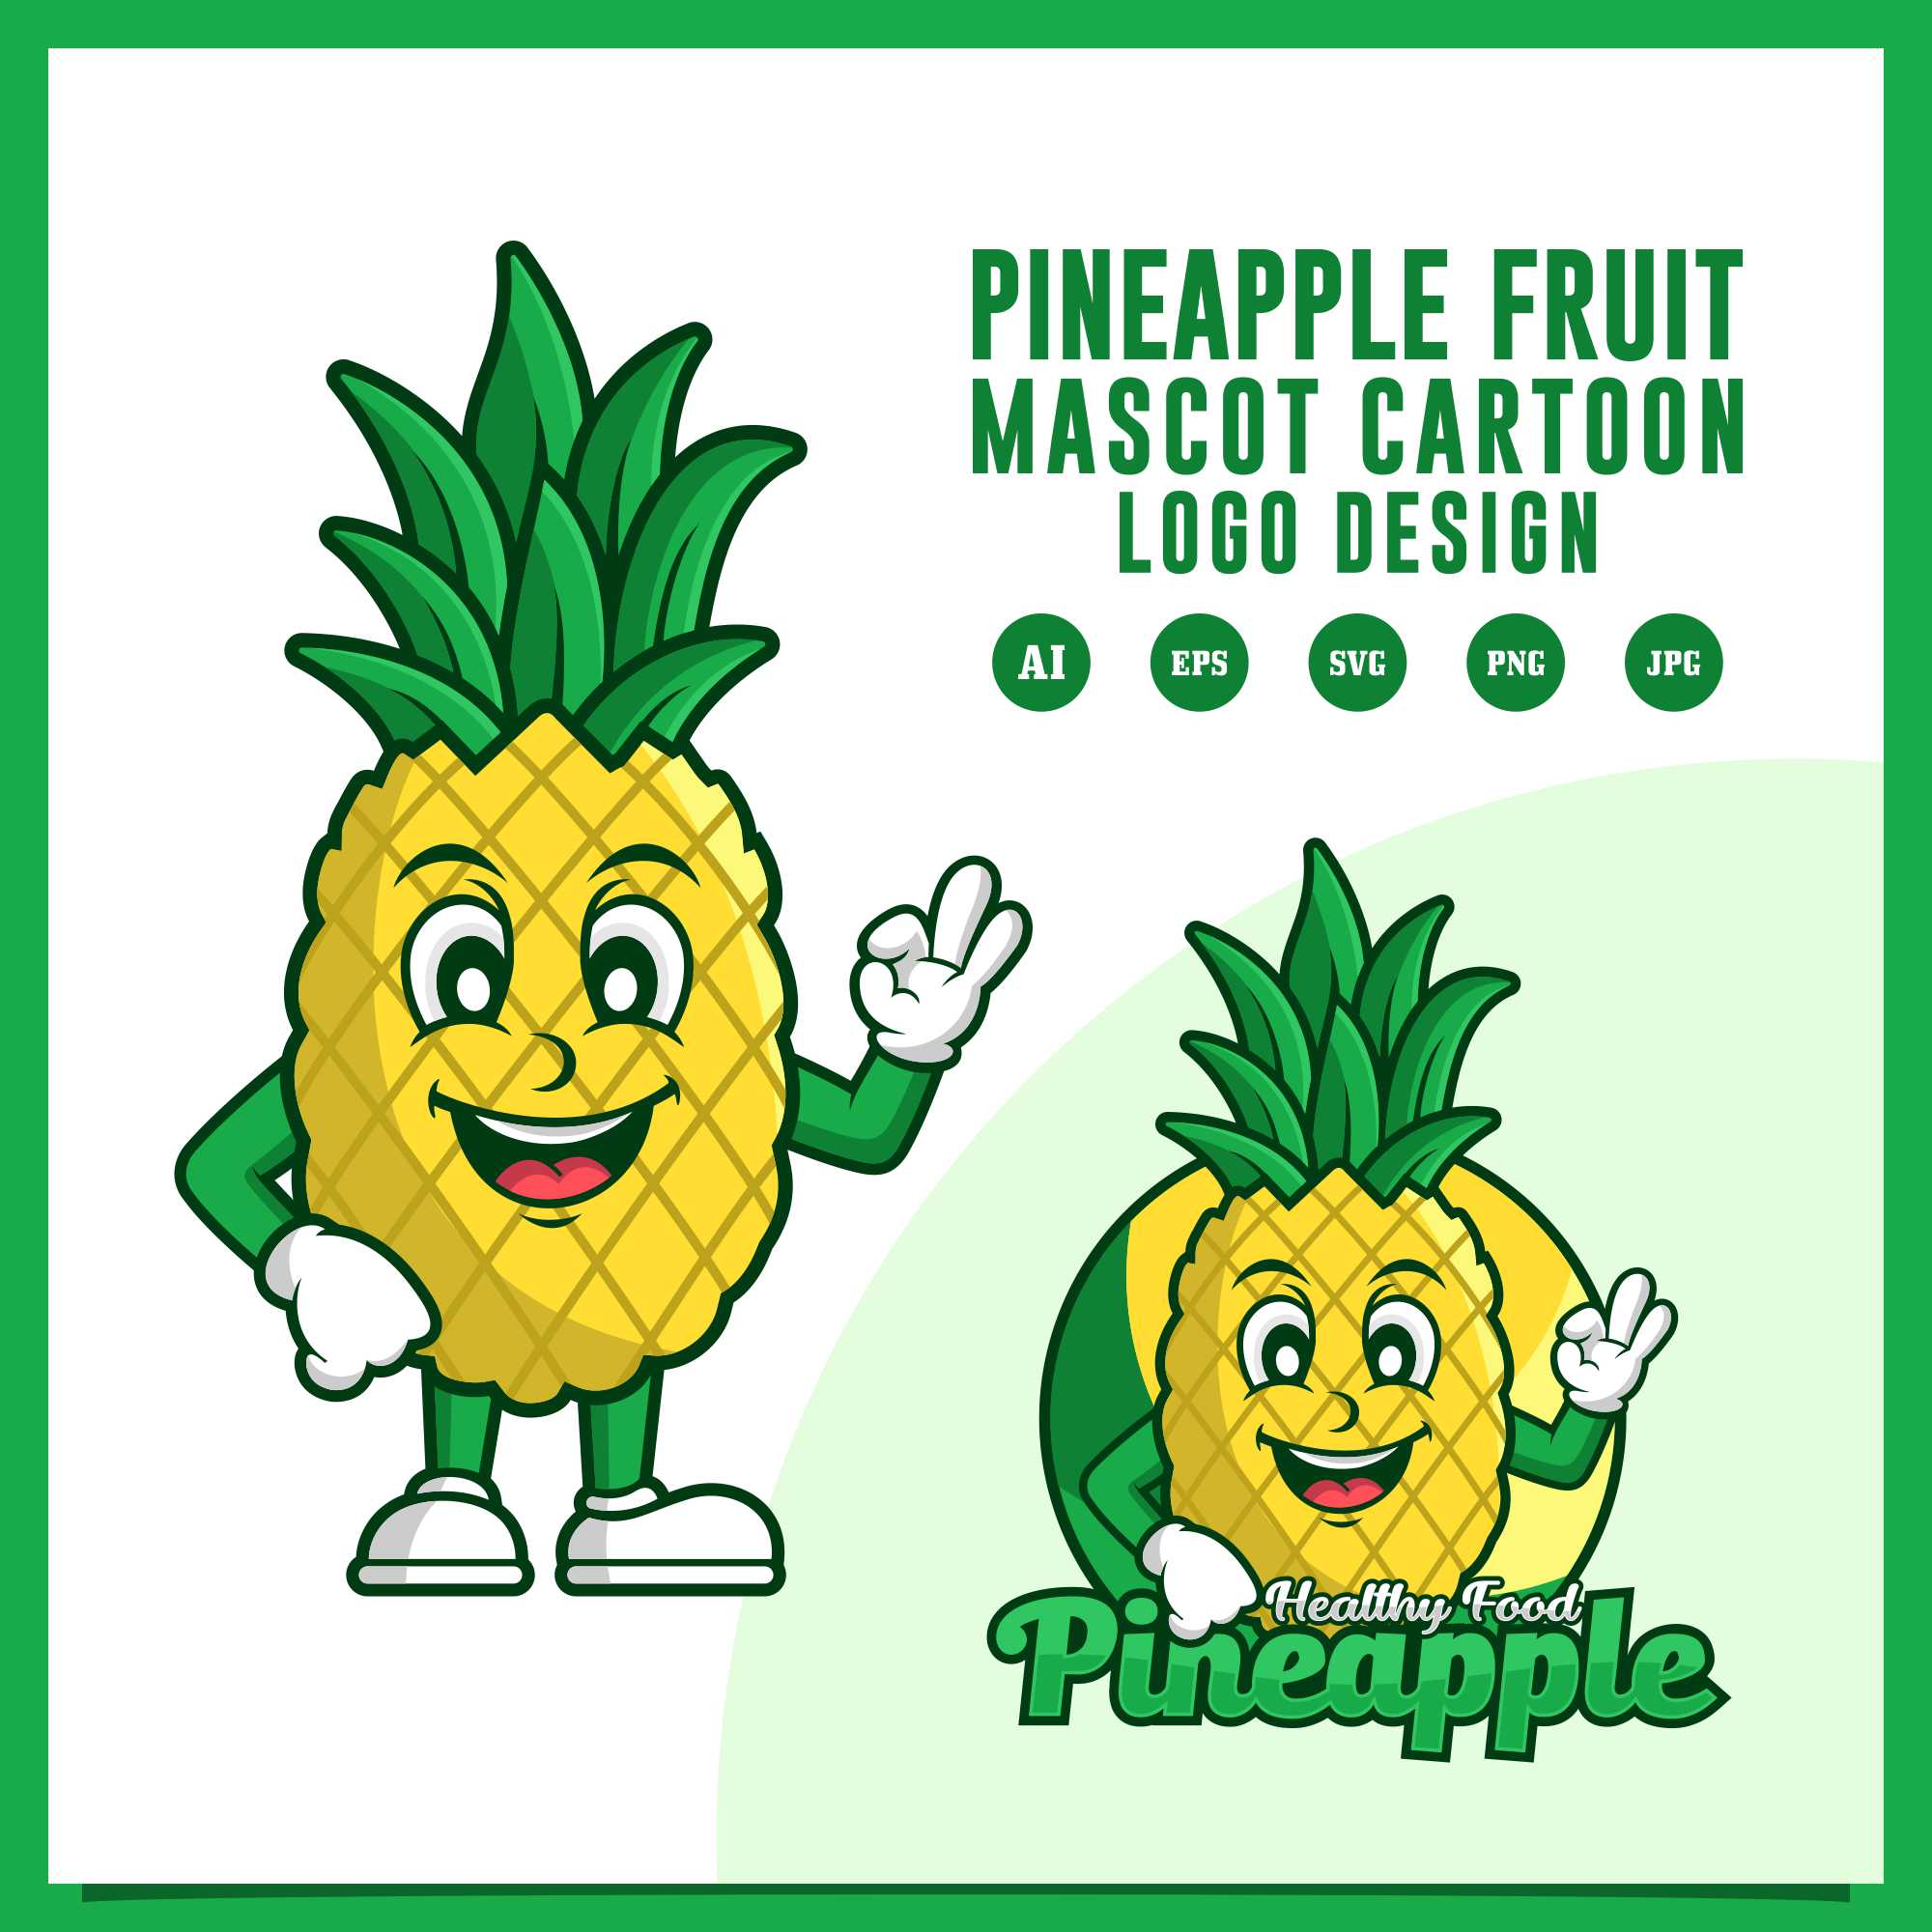 Set Pineapple fruit mascot cartoon logo design - $6 cover image.